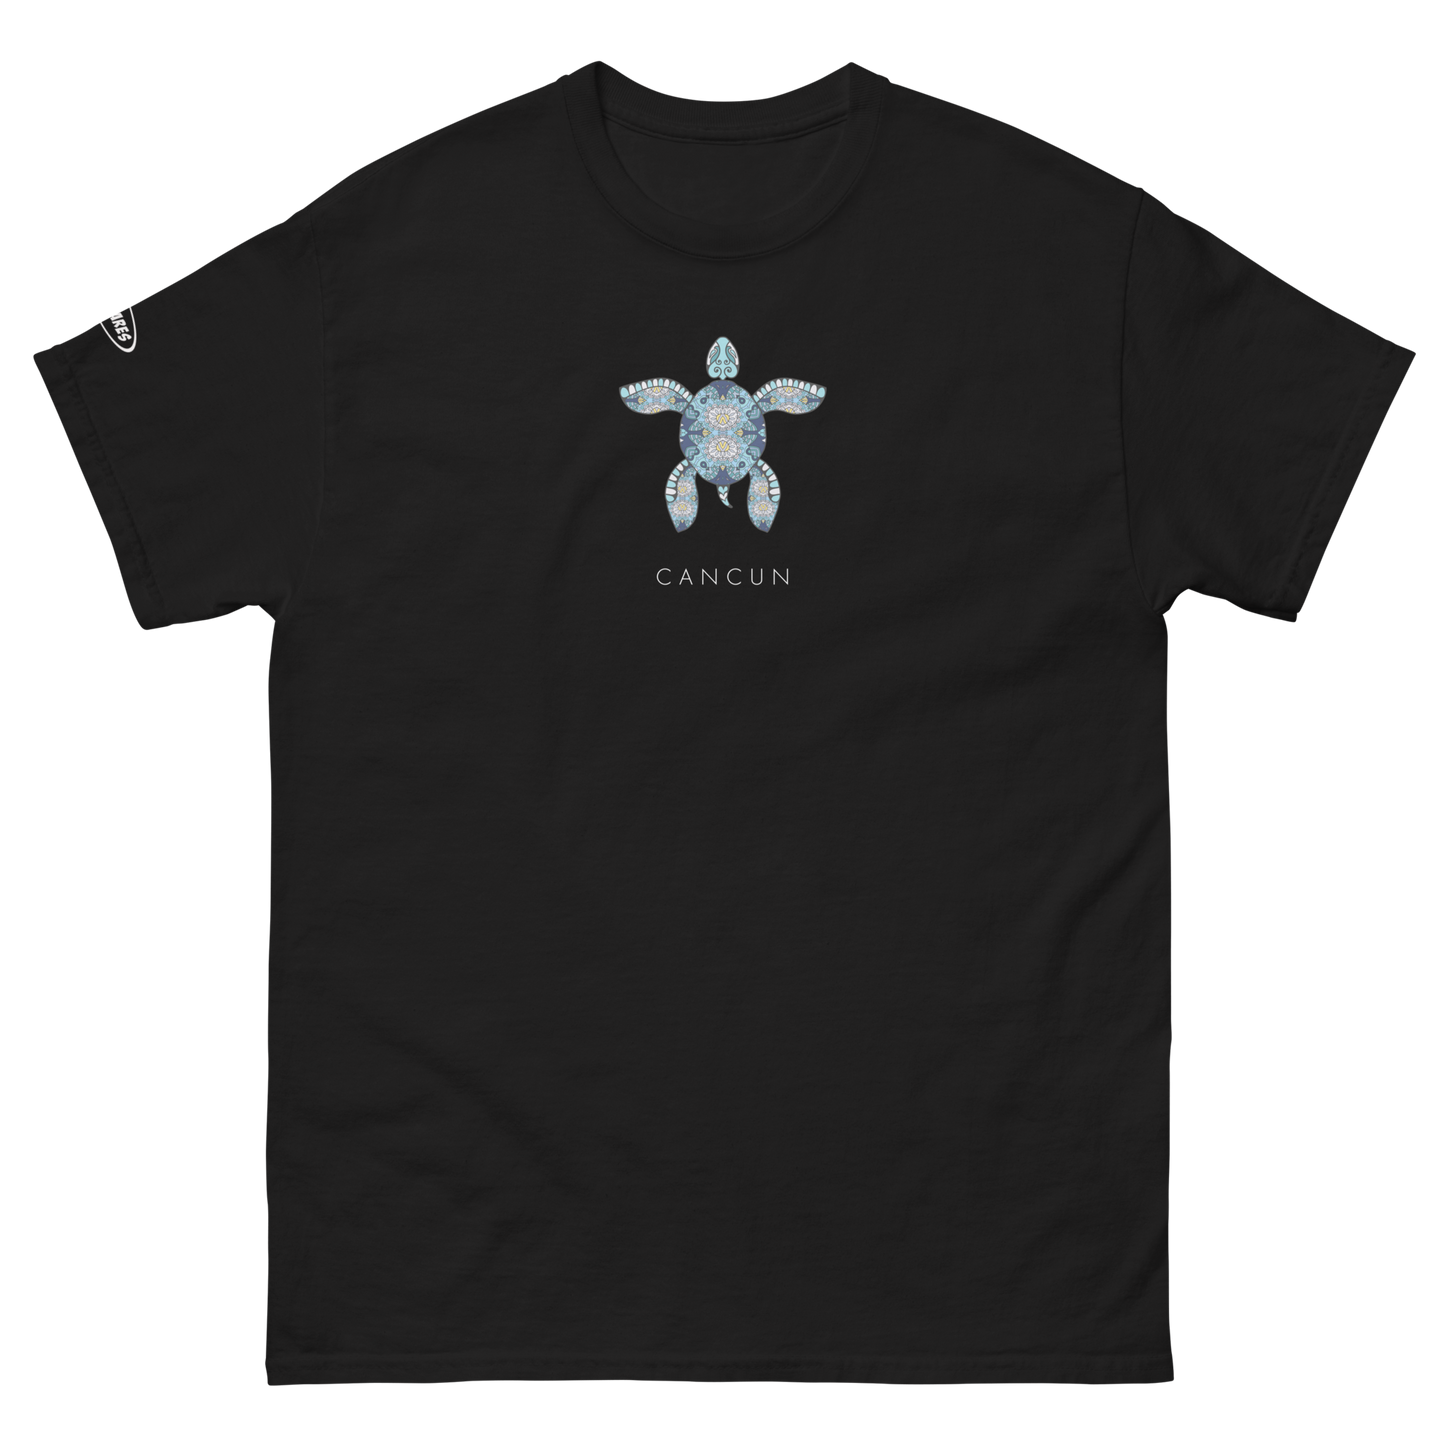 Unisex - CANCUN - Ocean Sea Ornate Turtle T-Shirt